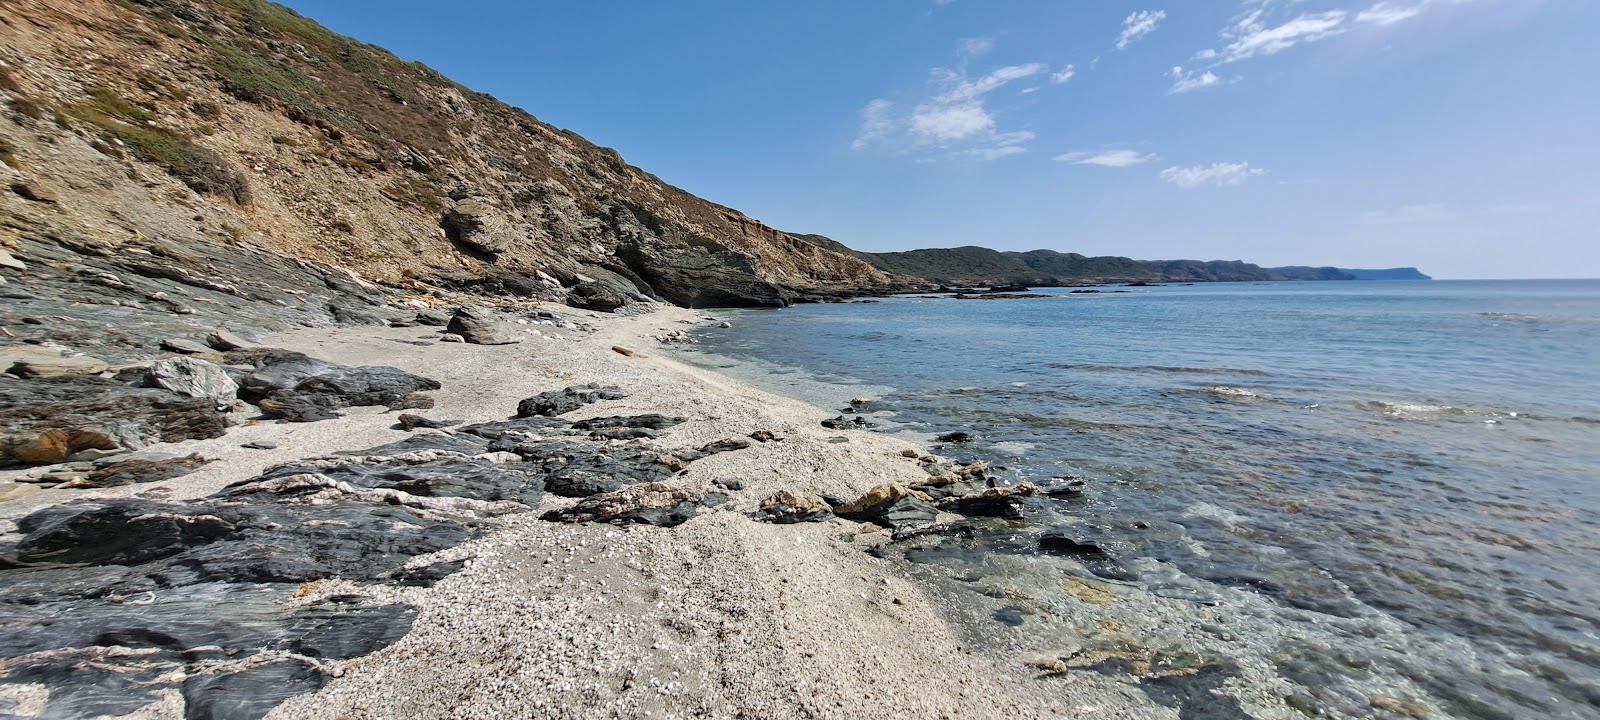 Foto de Spiaggia Isola dei Porri con muy limpio nivel de limpieza